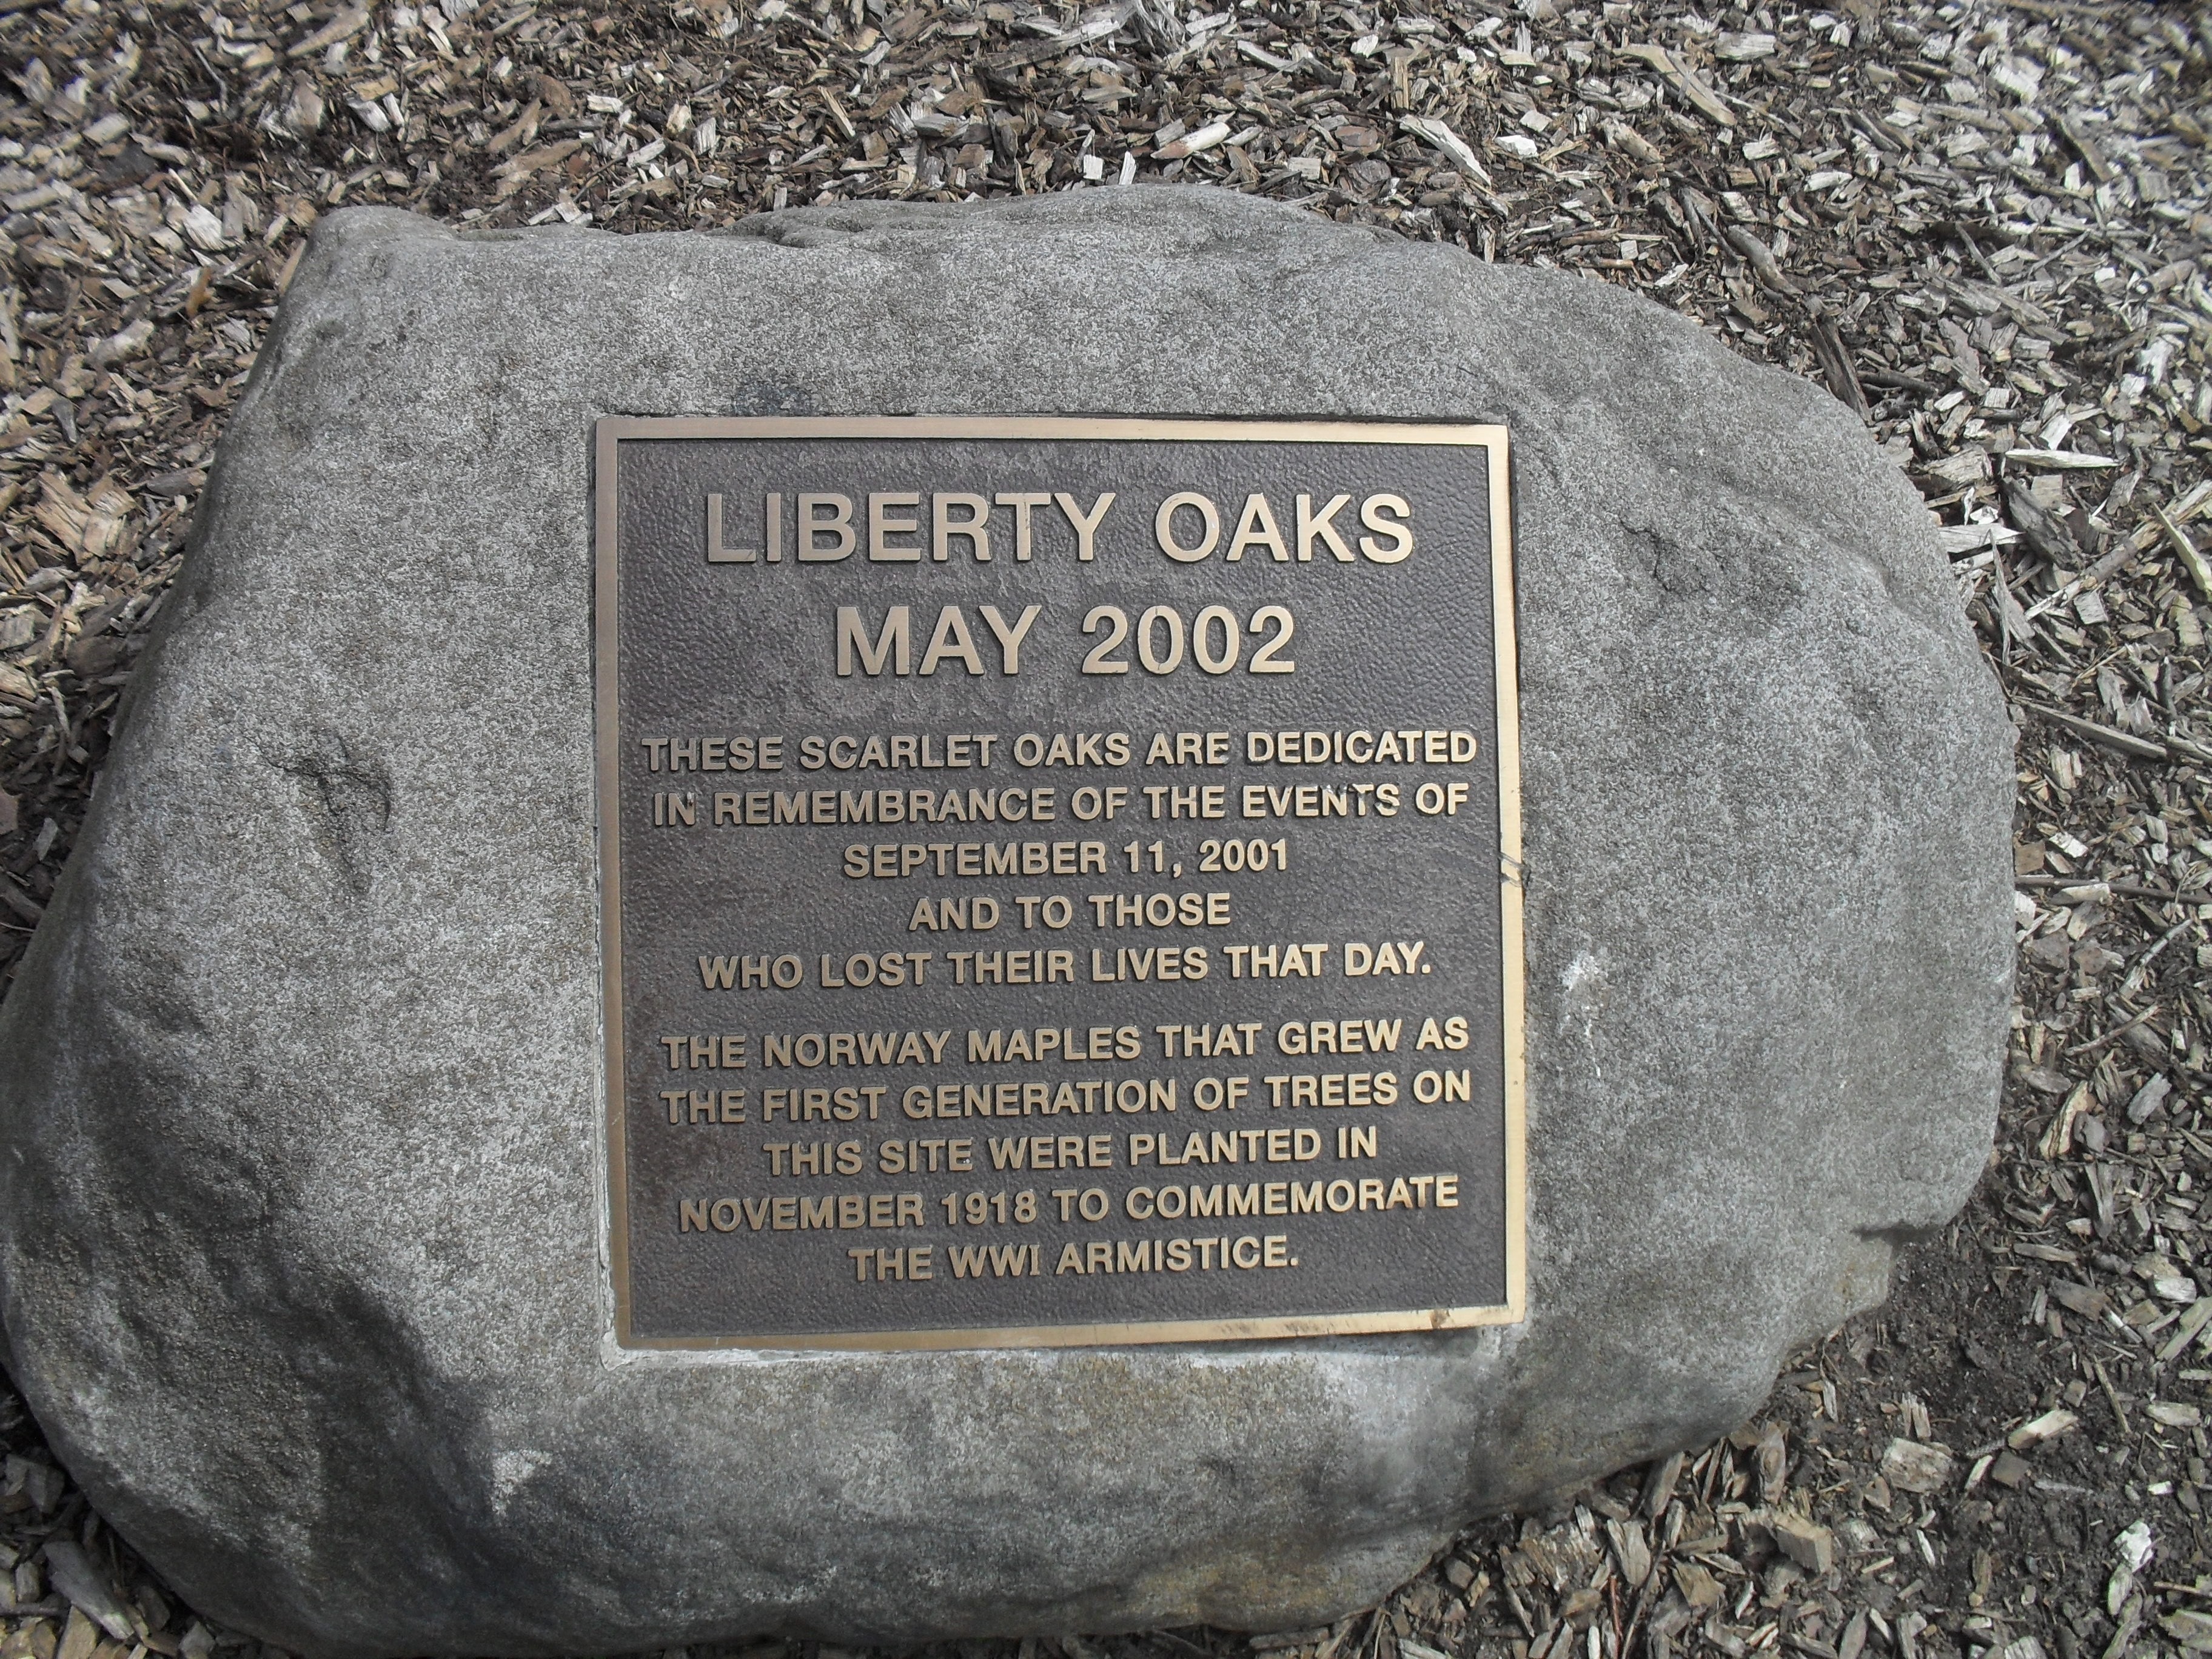 liberty oaks may 2002 signage